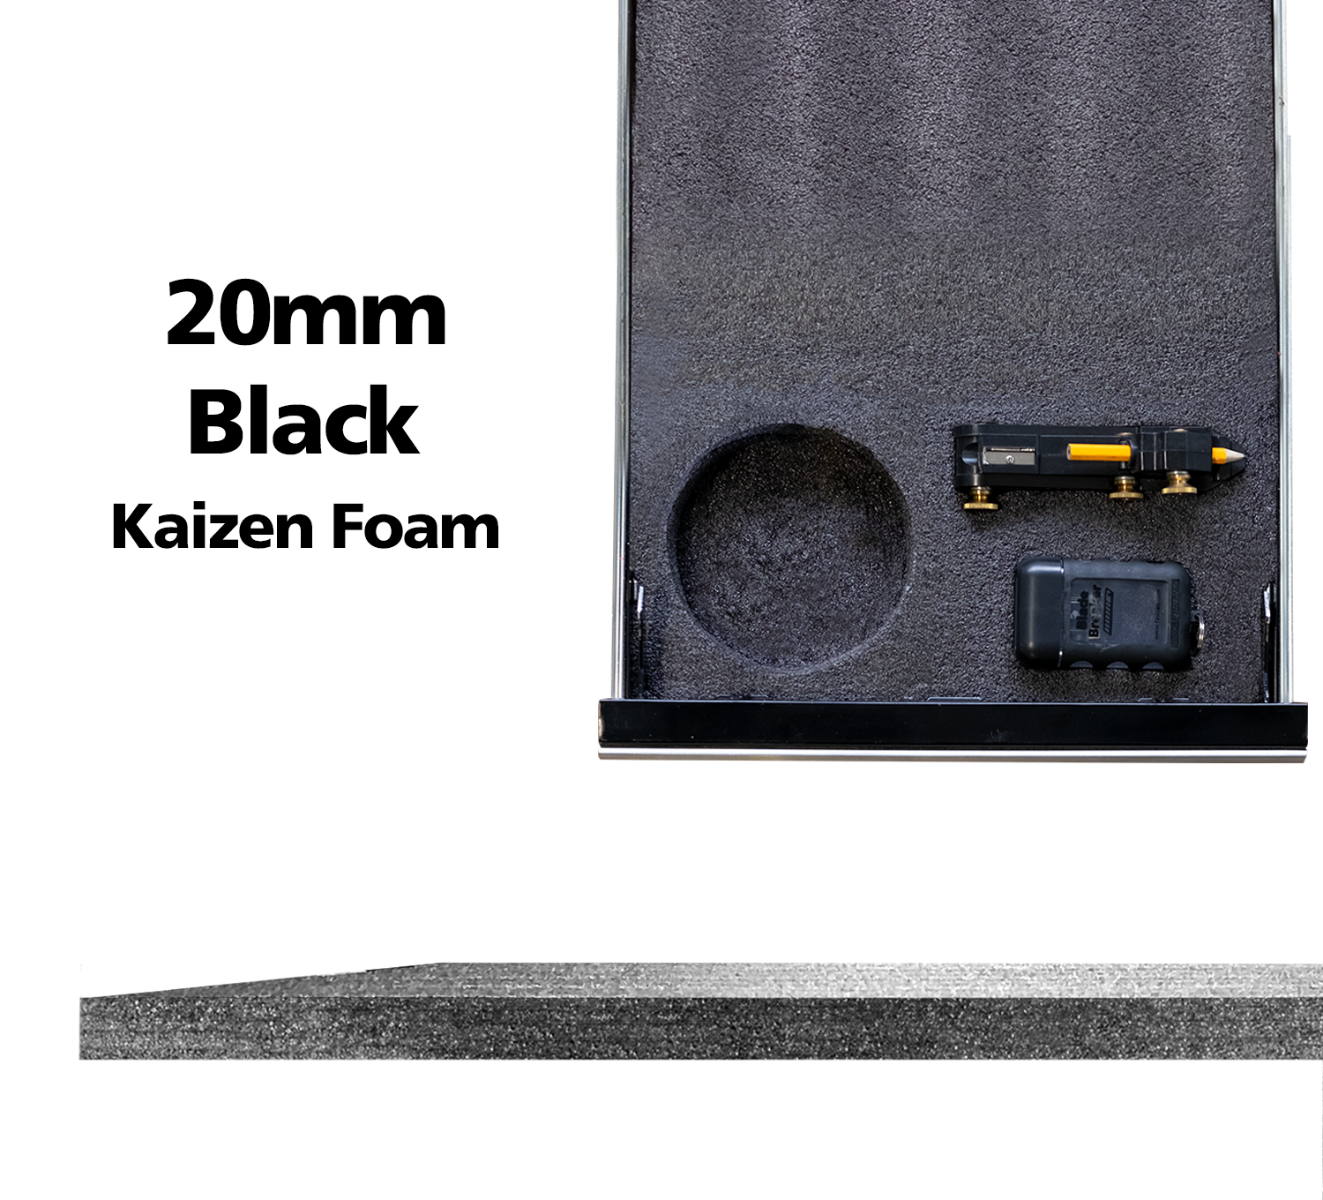 New Sheet of Black and White Kaizen Foam